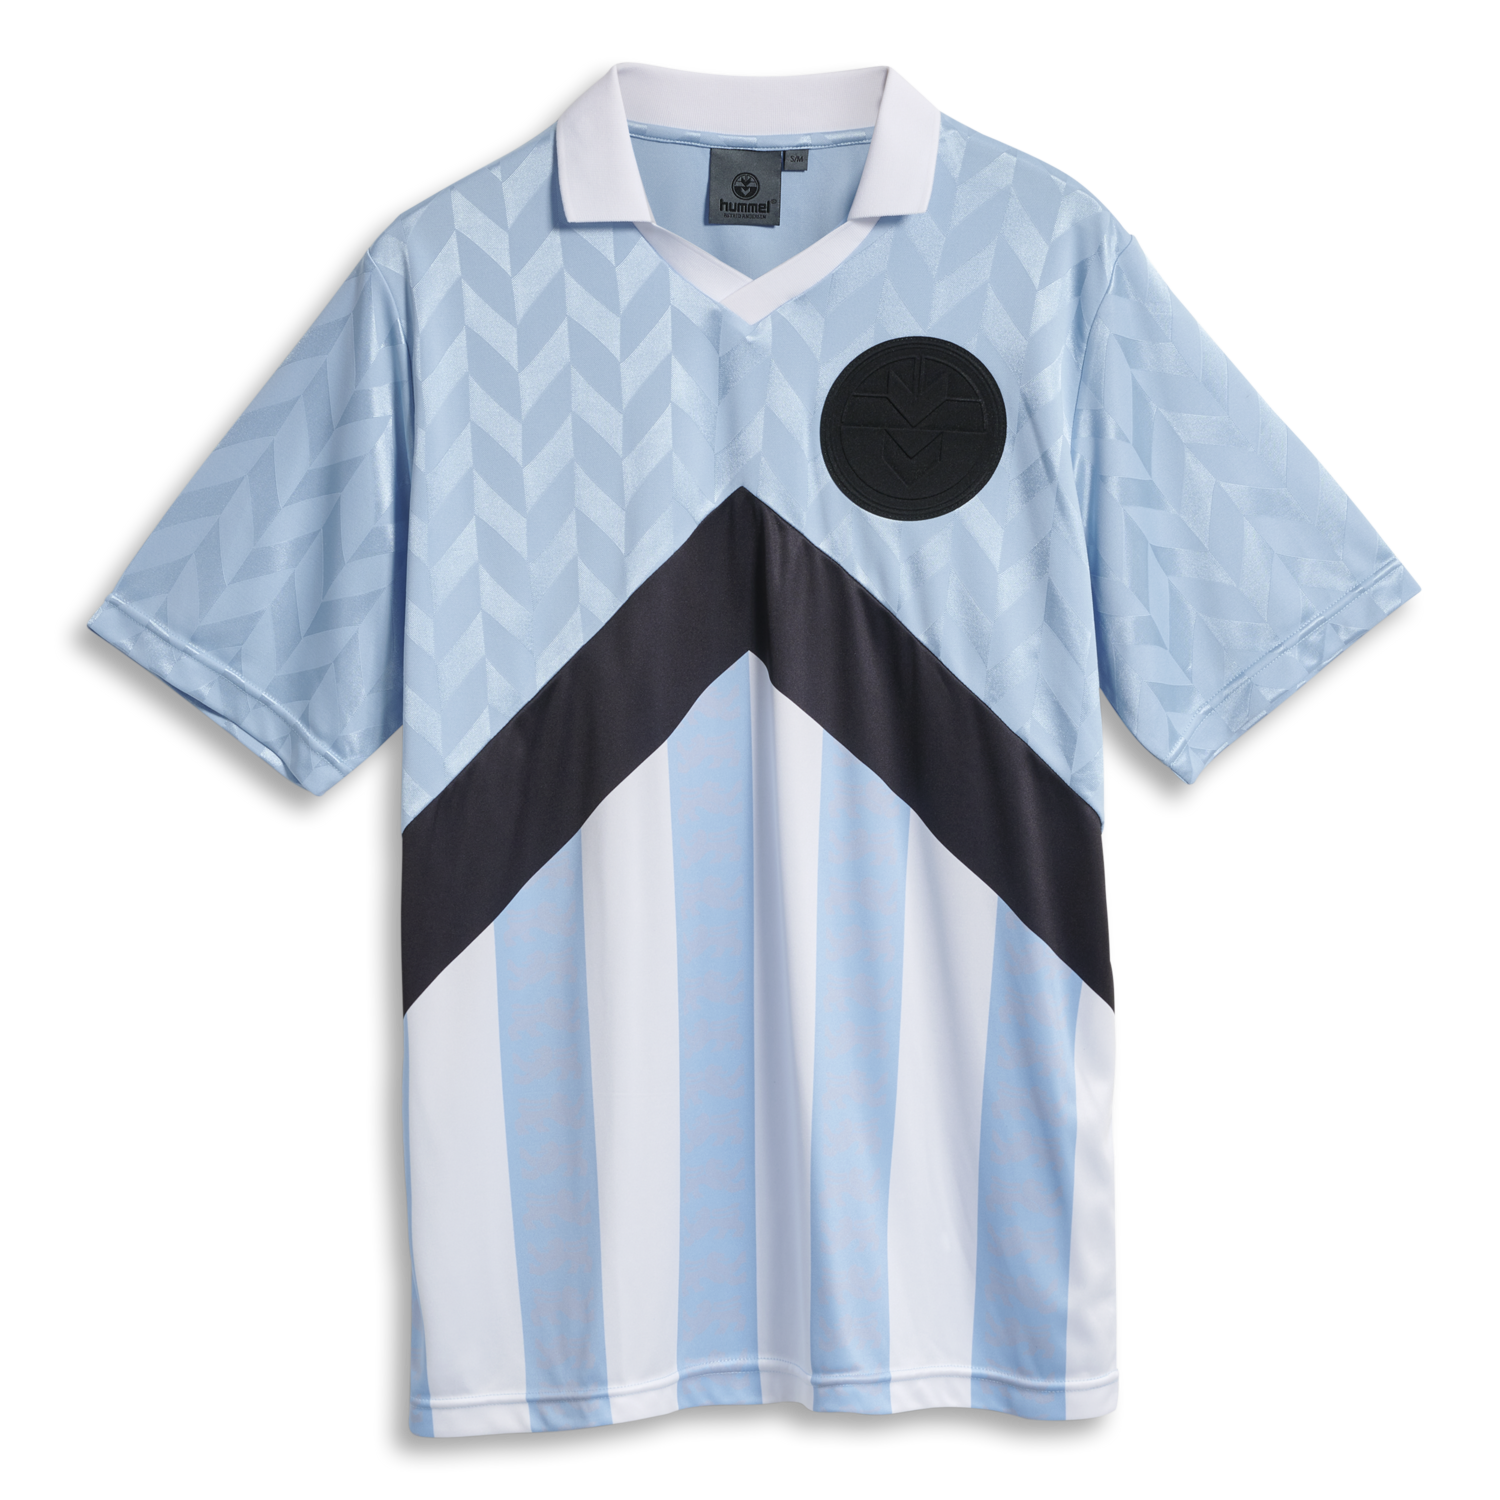 argentina blue jersey